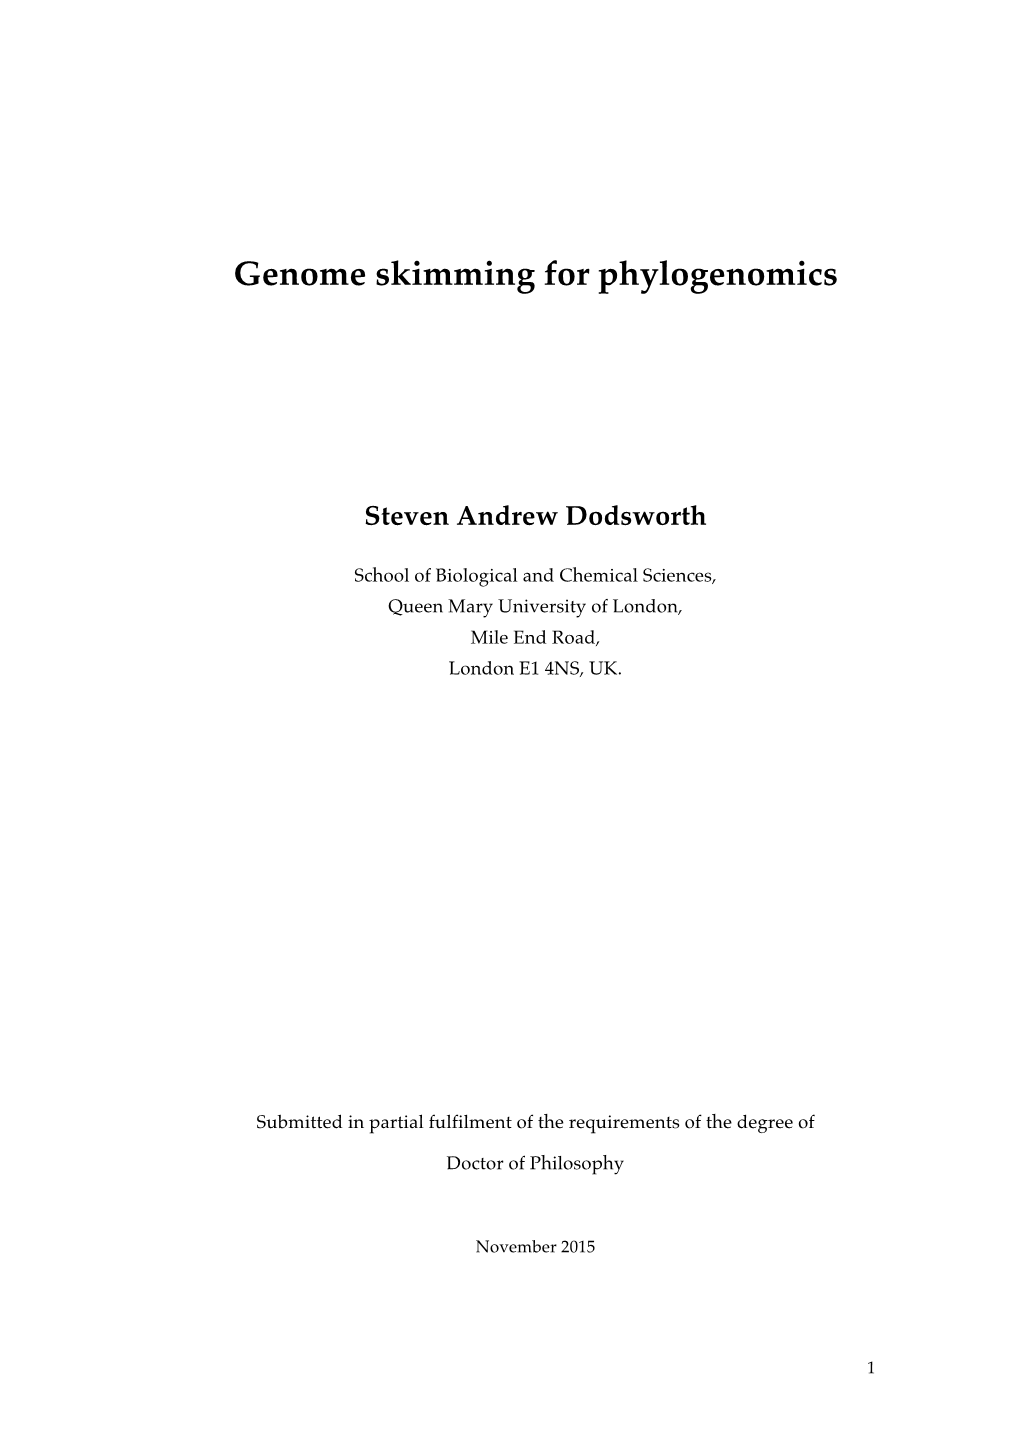 Genome Skimming for Phylogenomics